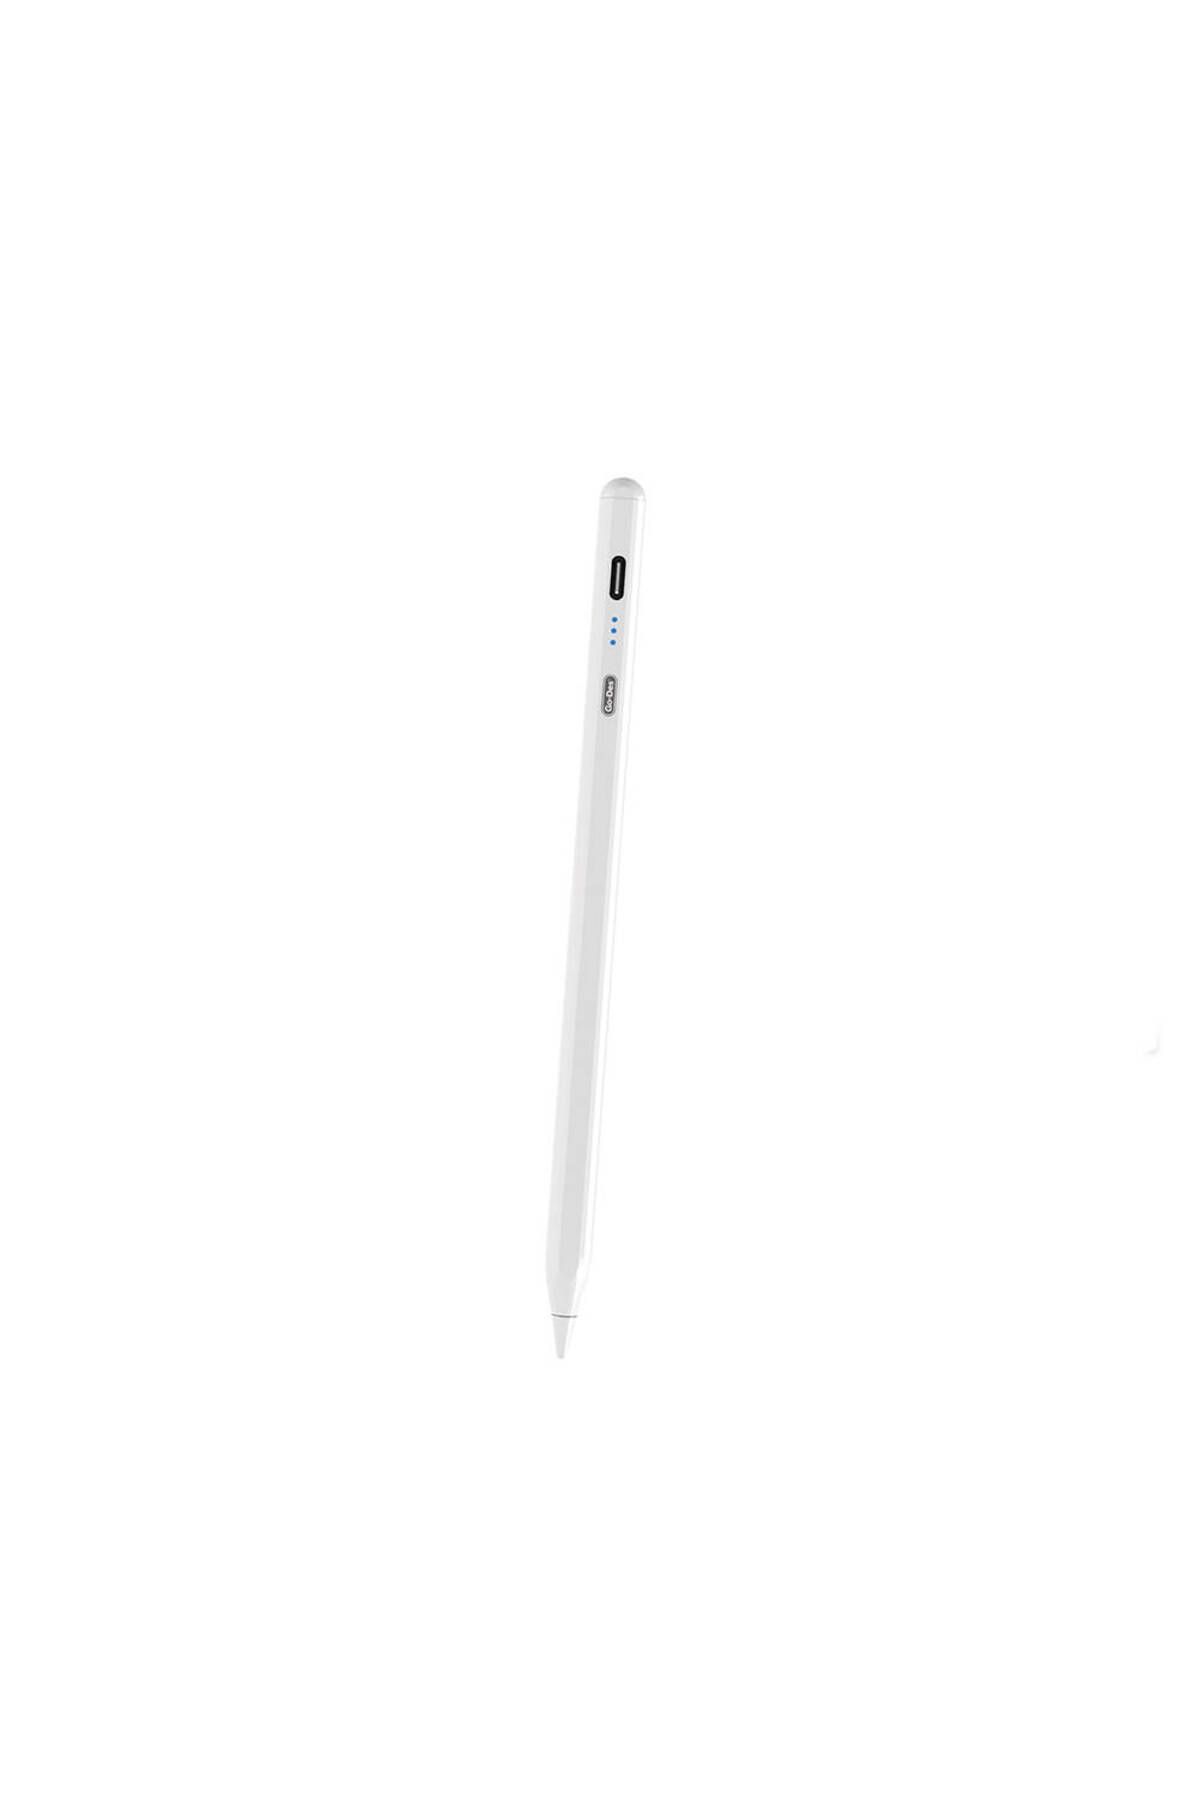 Go-Des Palm-Rejection Özellikli Dokunmatik Stylus Kalem Go Des GD-P1126 Magnetik Şarj Destekli Beyaz